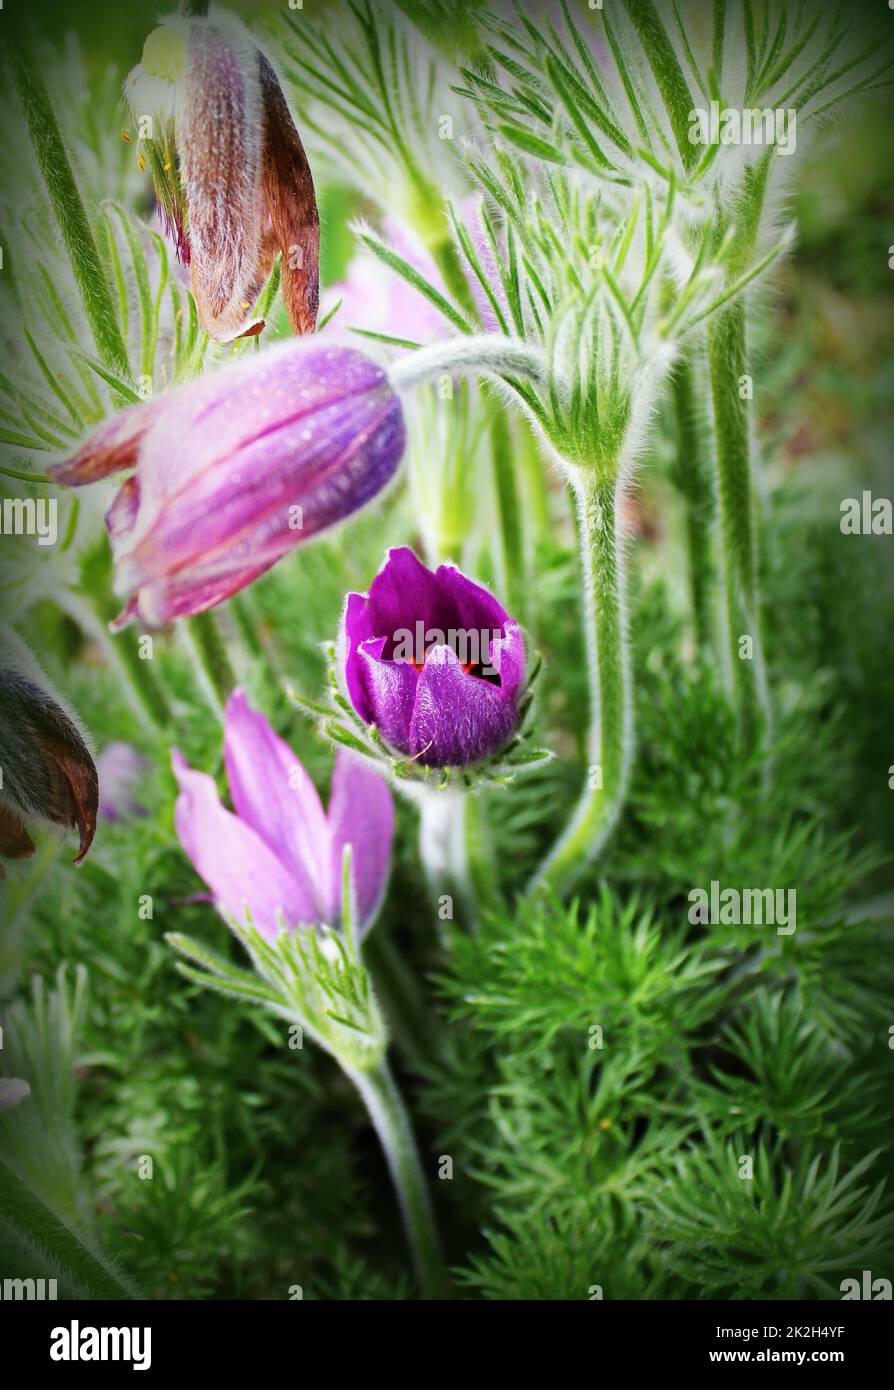 Schöne lila kleinen pelzigen-Kuhschelle. Pulsatilla Grandis. Frühlingsblumen blühen. Stockfoto